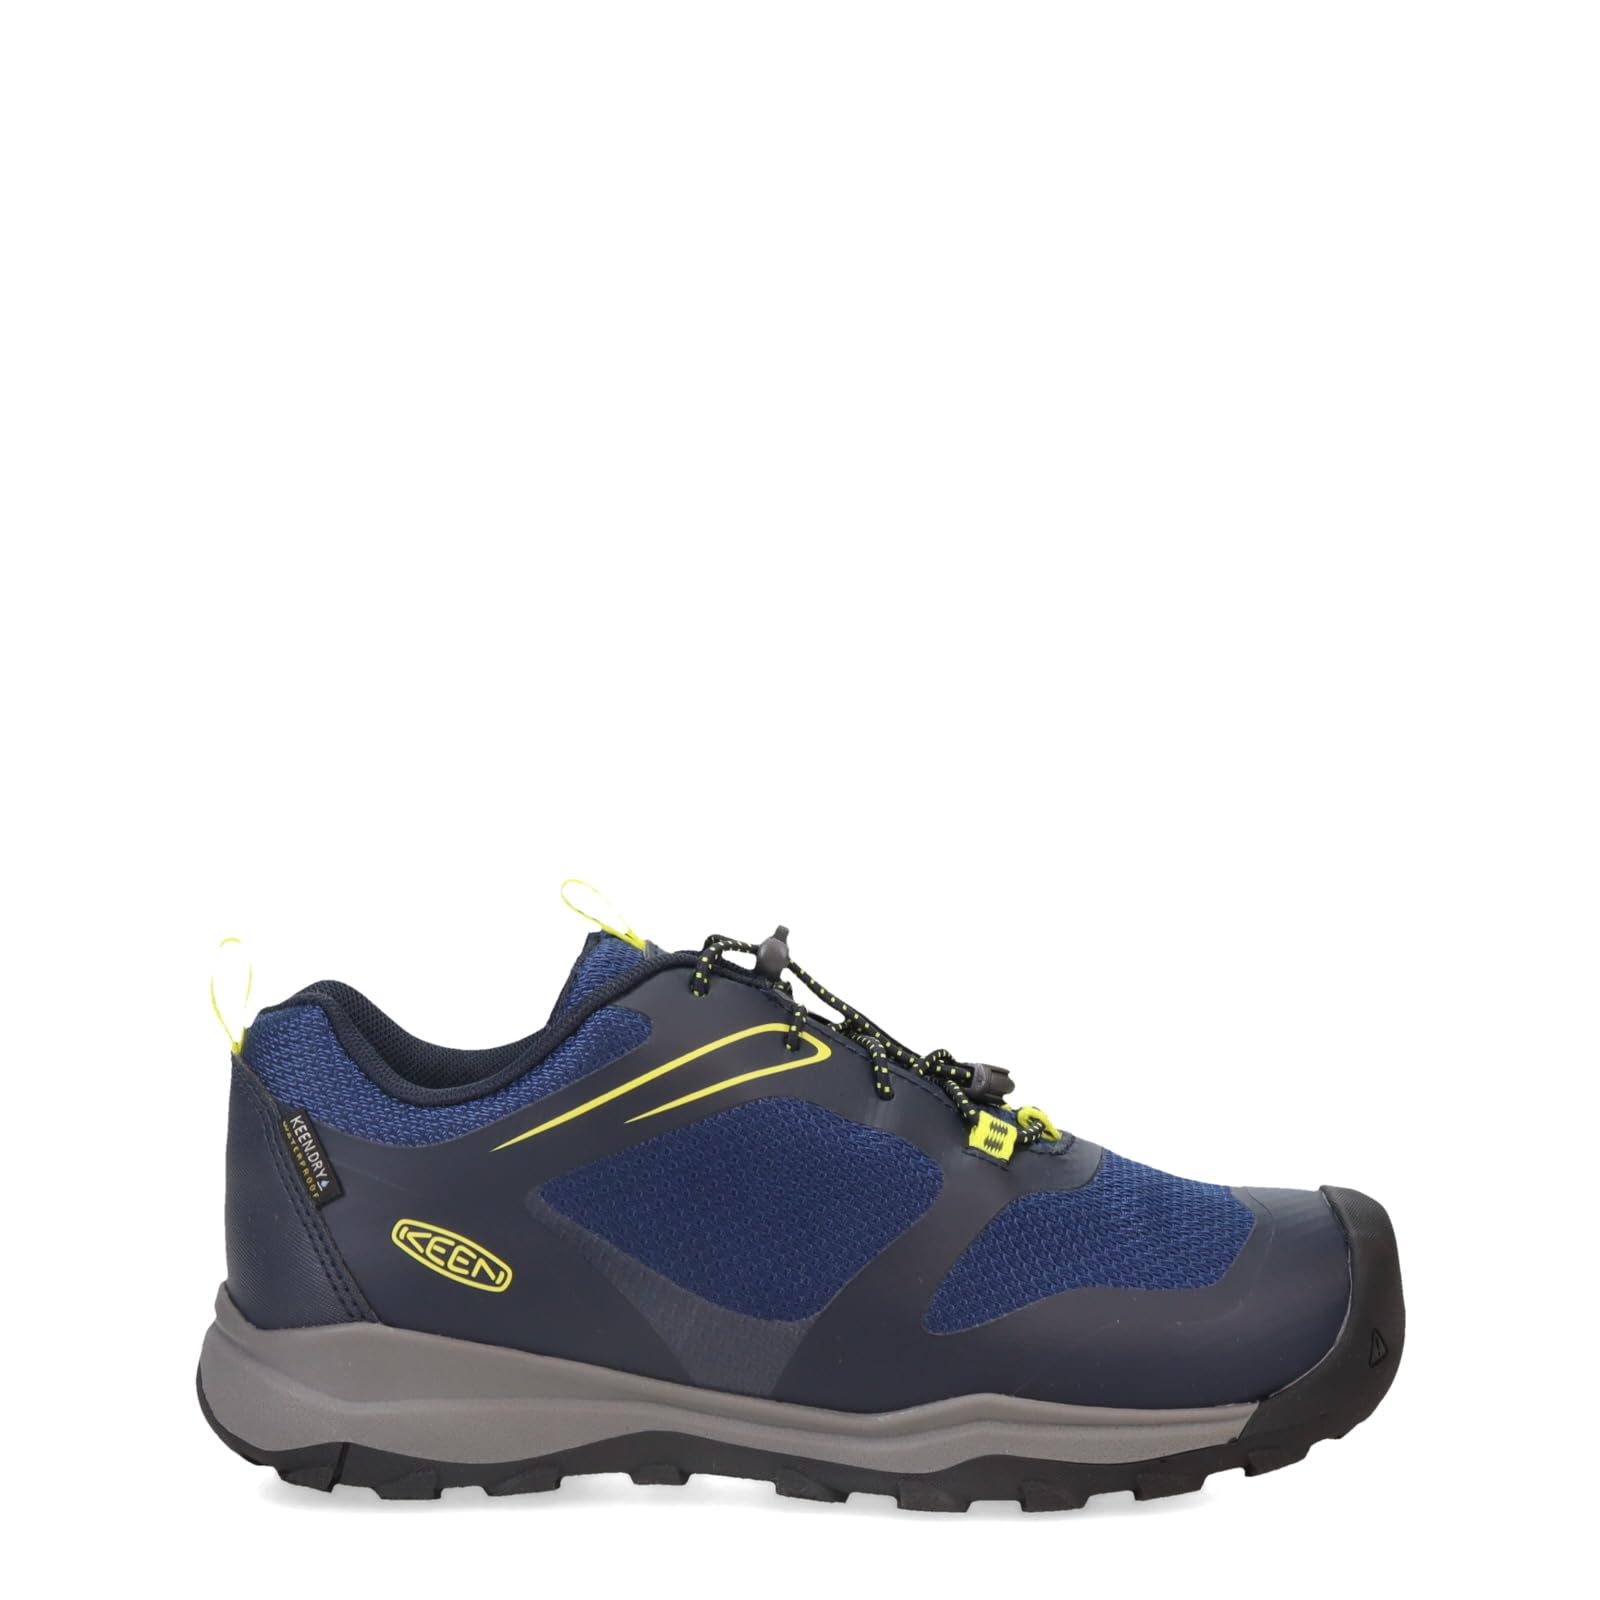 KEEN Unisex-Child Wanduro Low Height Waterproof Easy on Durable Hiking Sneakers